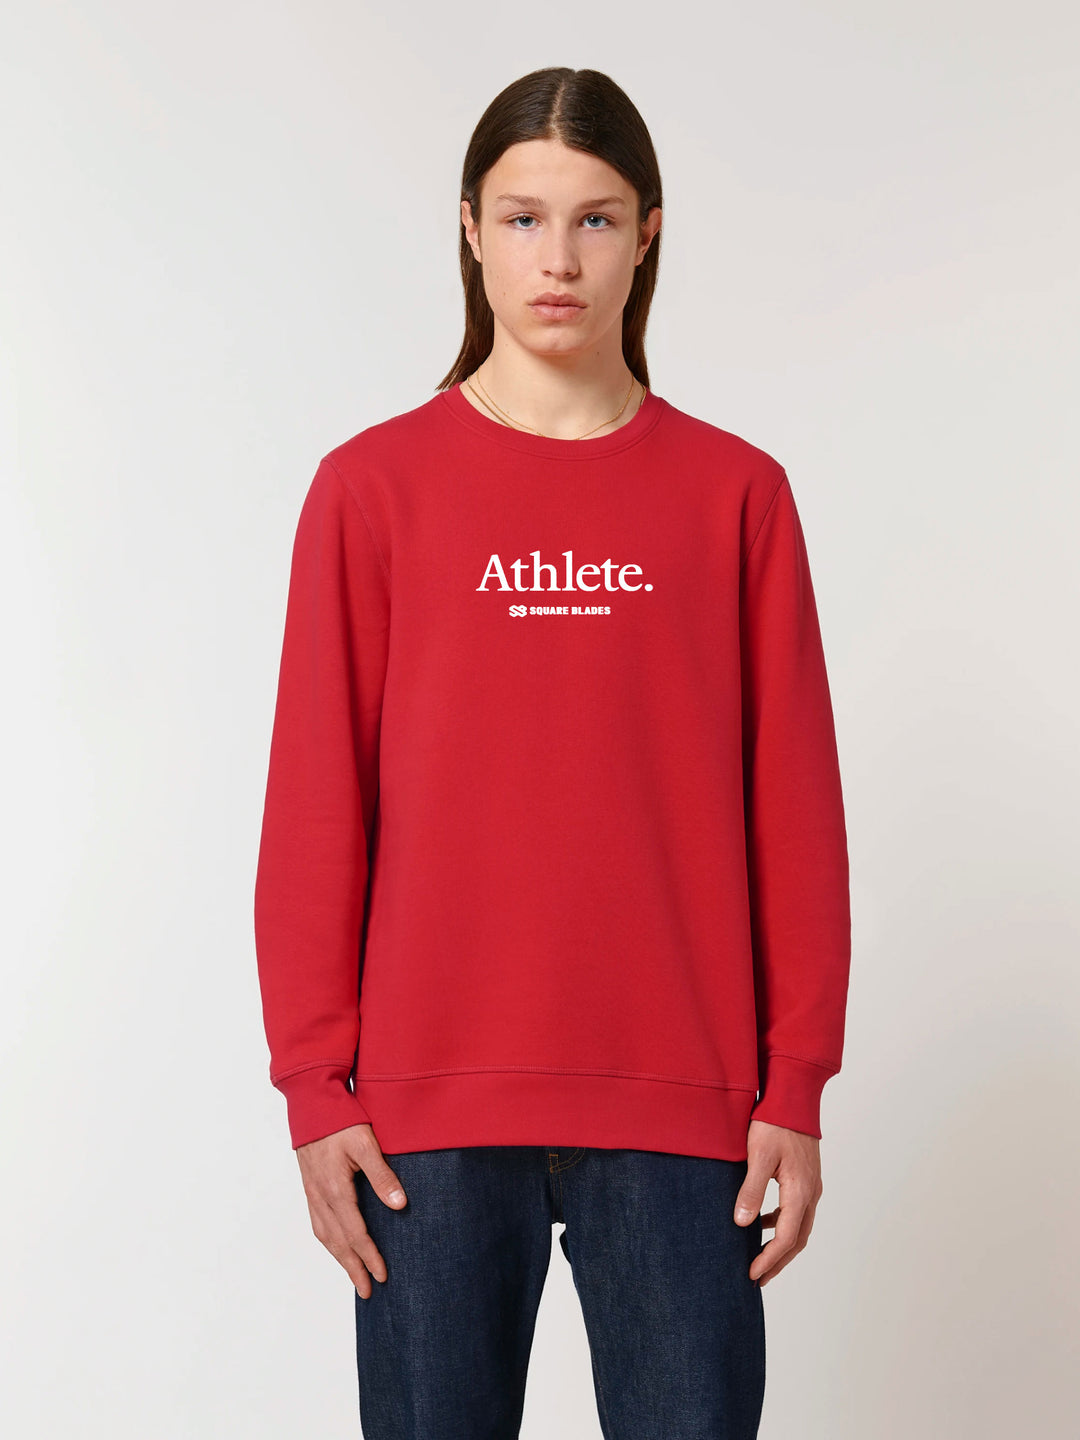 Athlete Sweatshirt